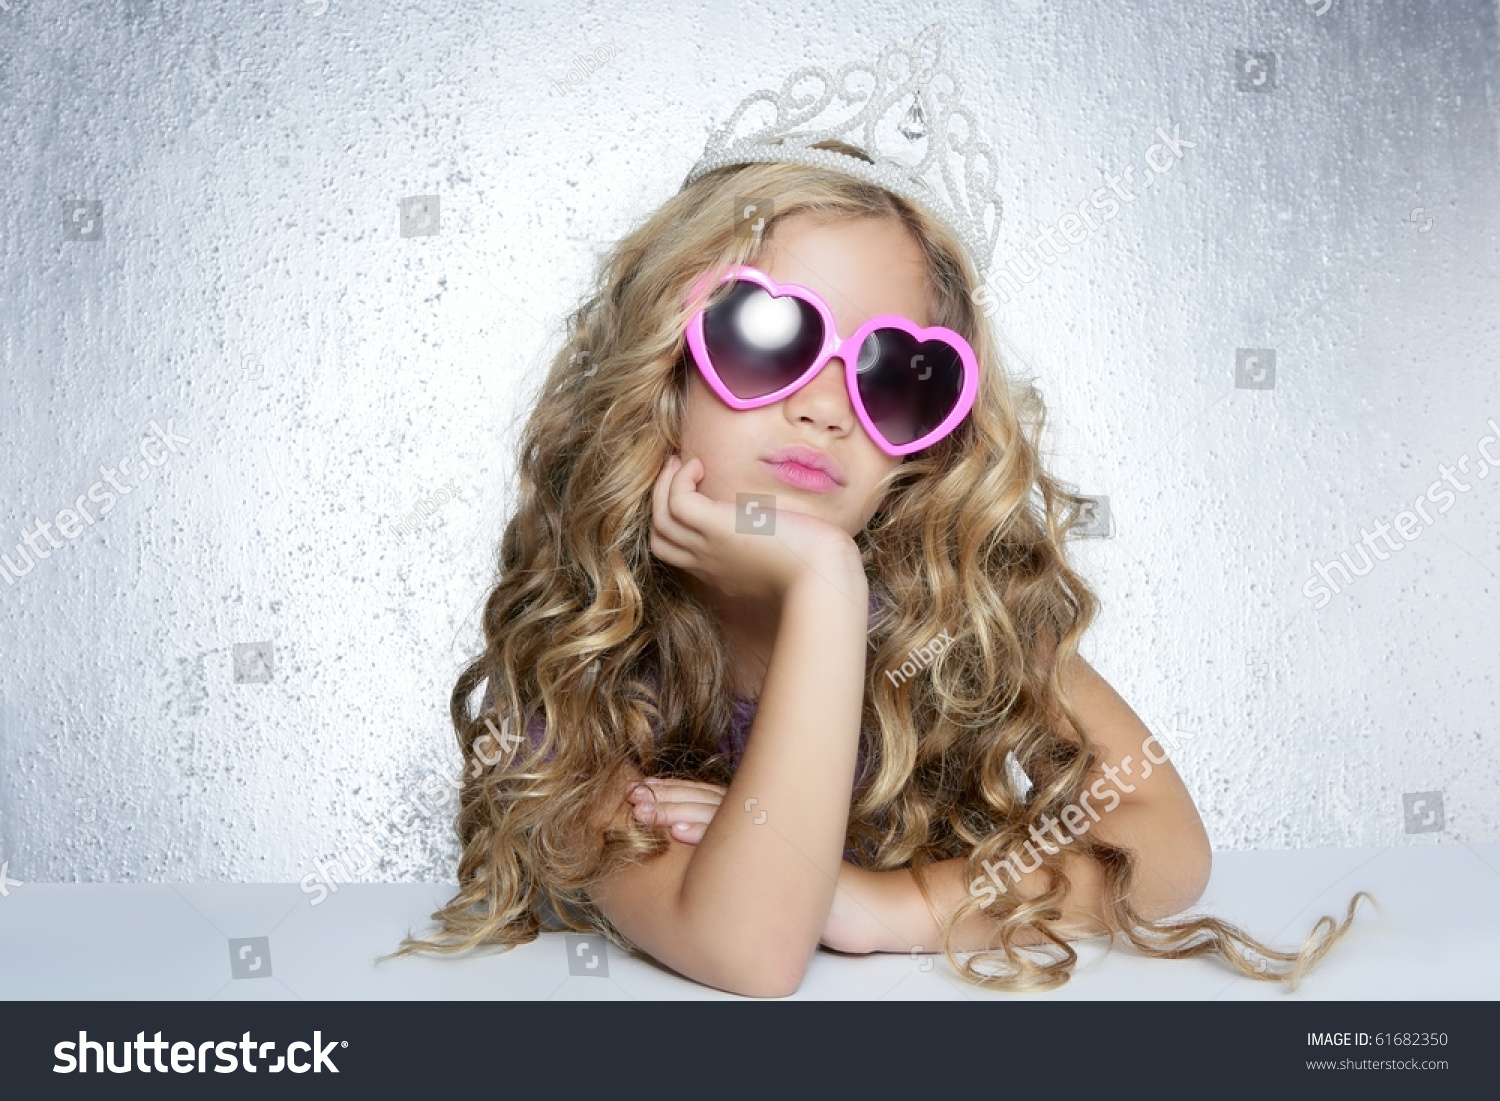 fashion victim little princess girl humor portrait crown and hearth shape glasses #61682350